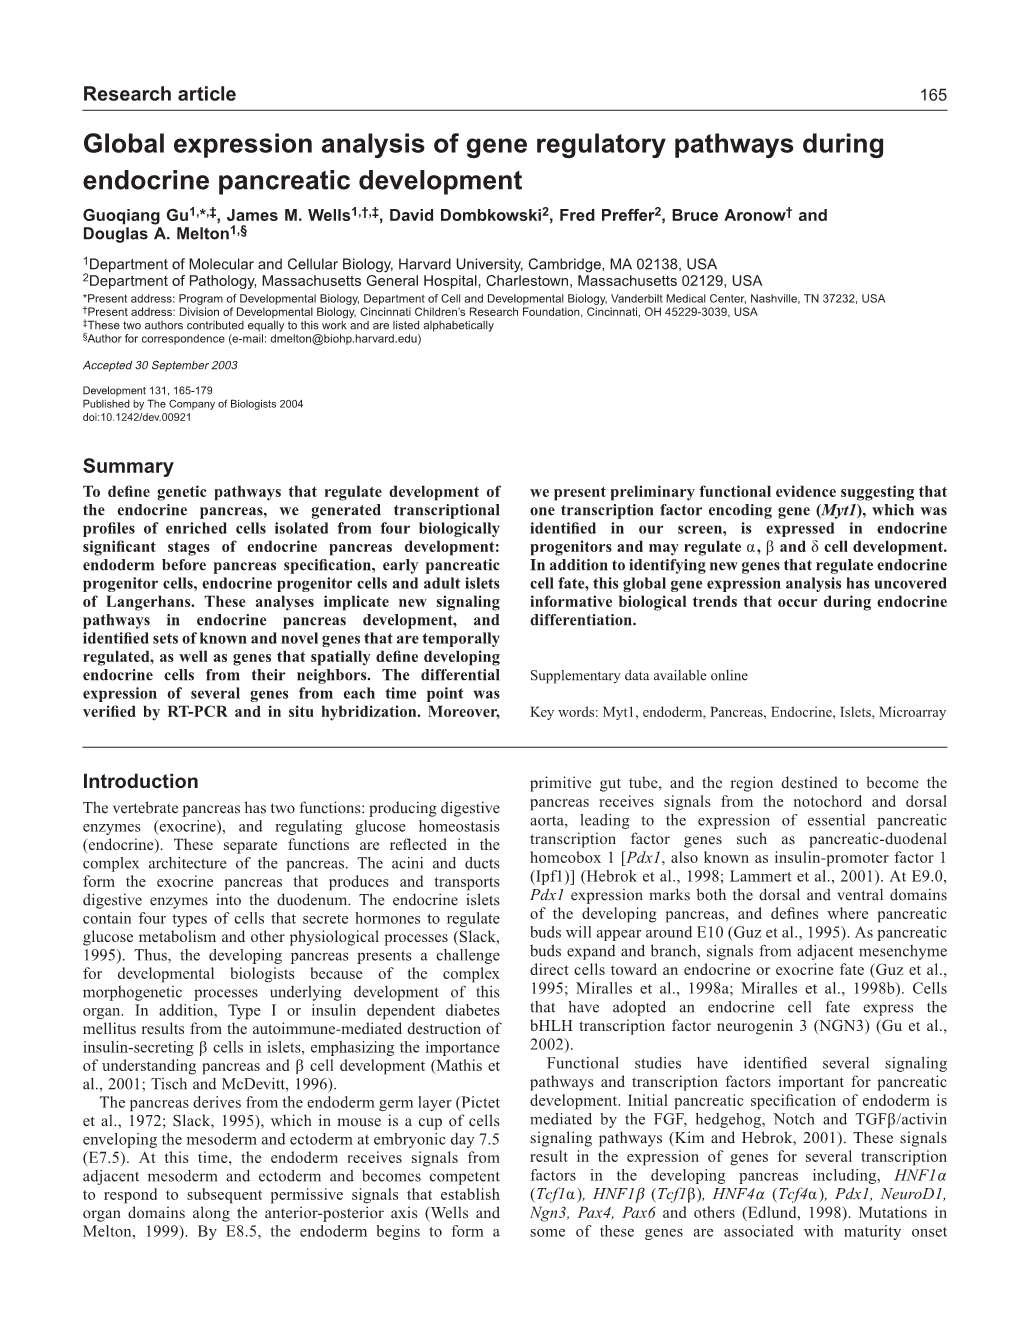 Global Expression Analysis of Gene Regulatory Pathways During Endocrine Pancreatic Development Guoqiang Gu1,*,‡, James M